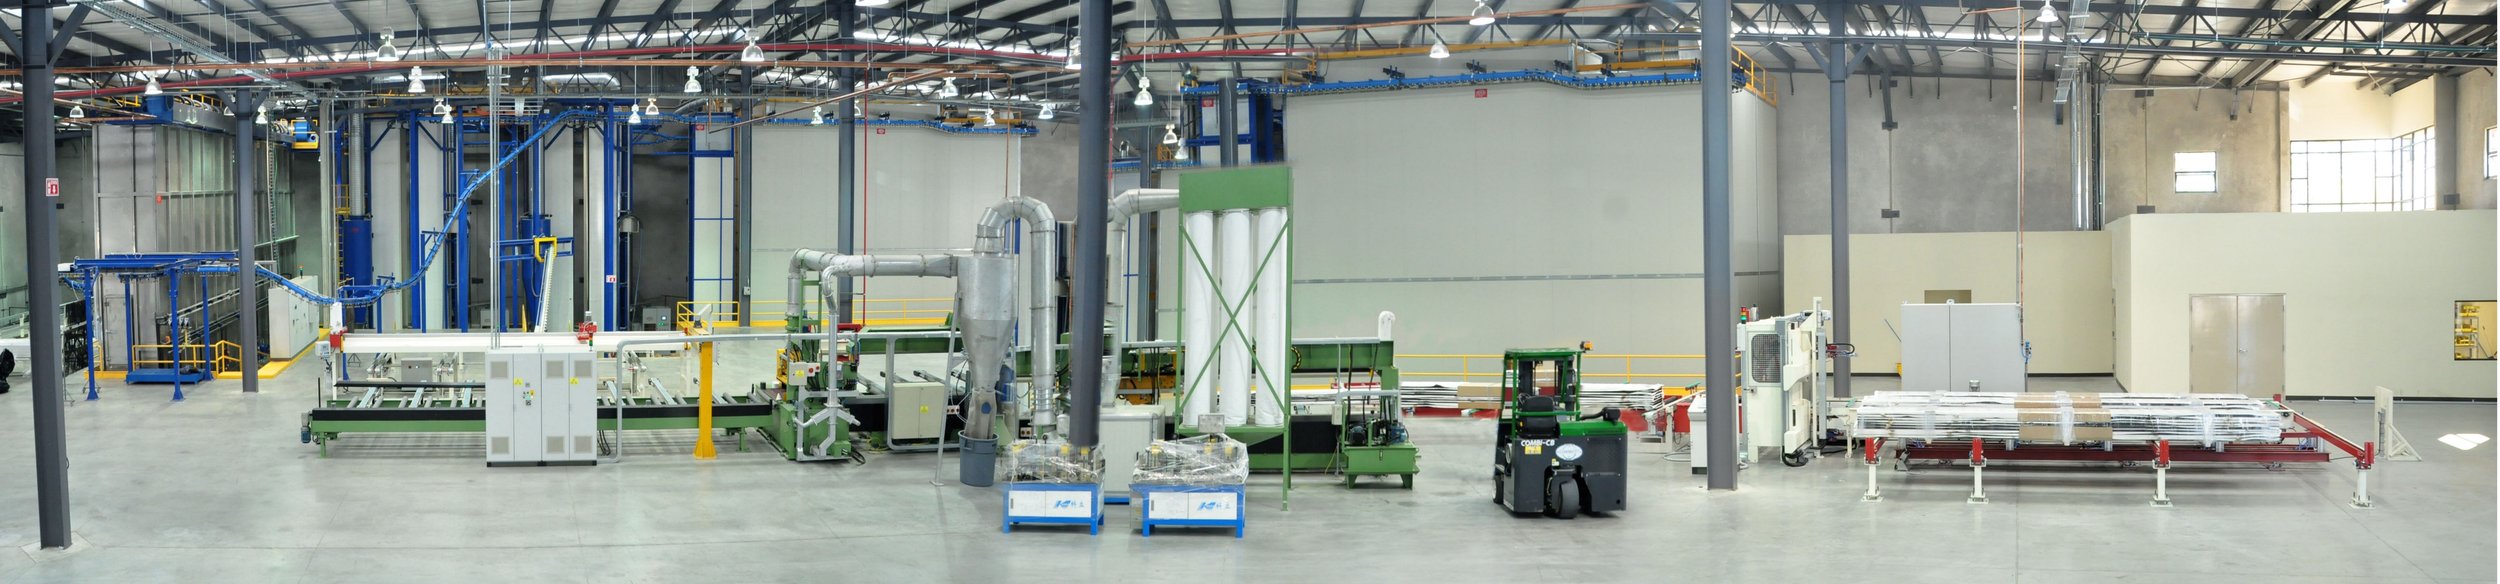 Warehouse with powder coat machinery 